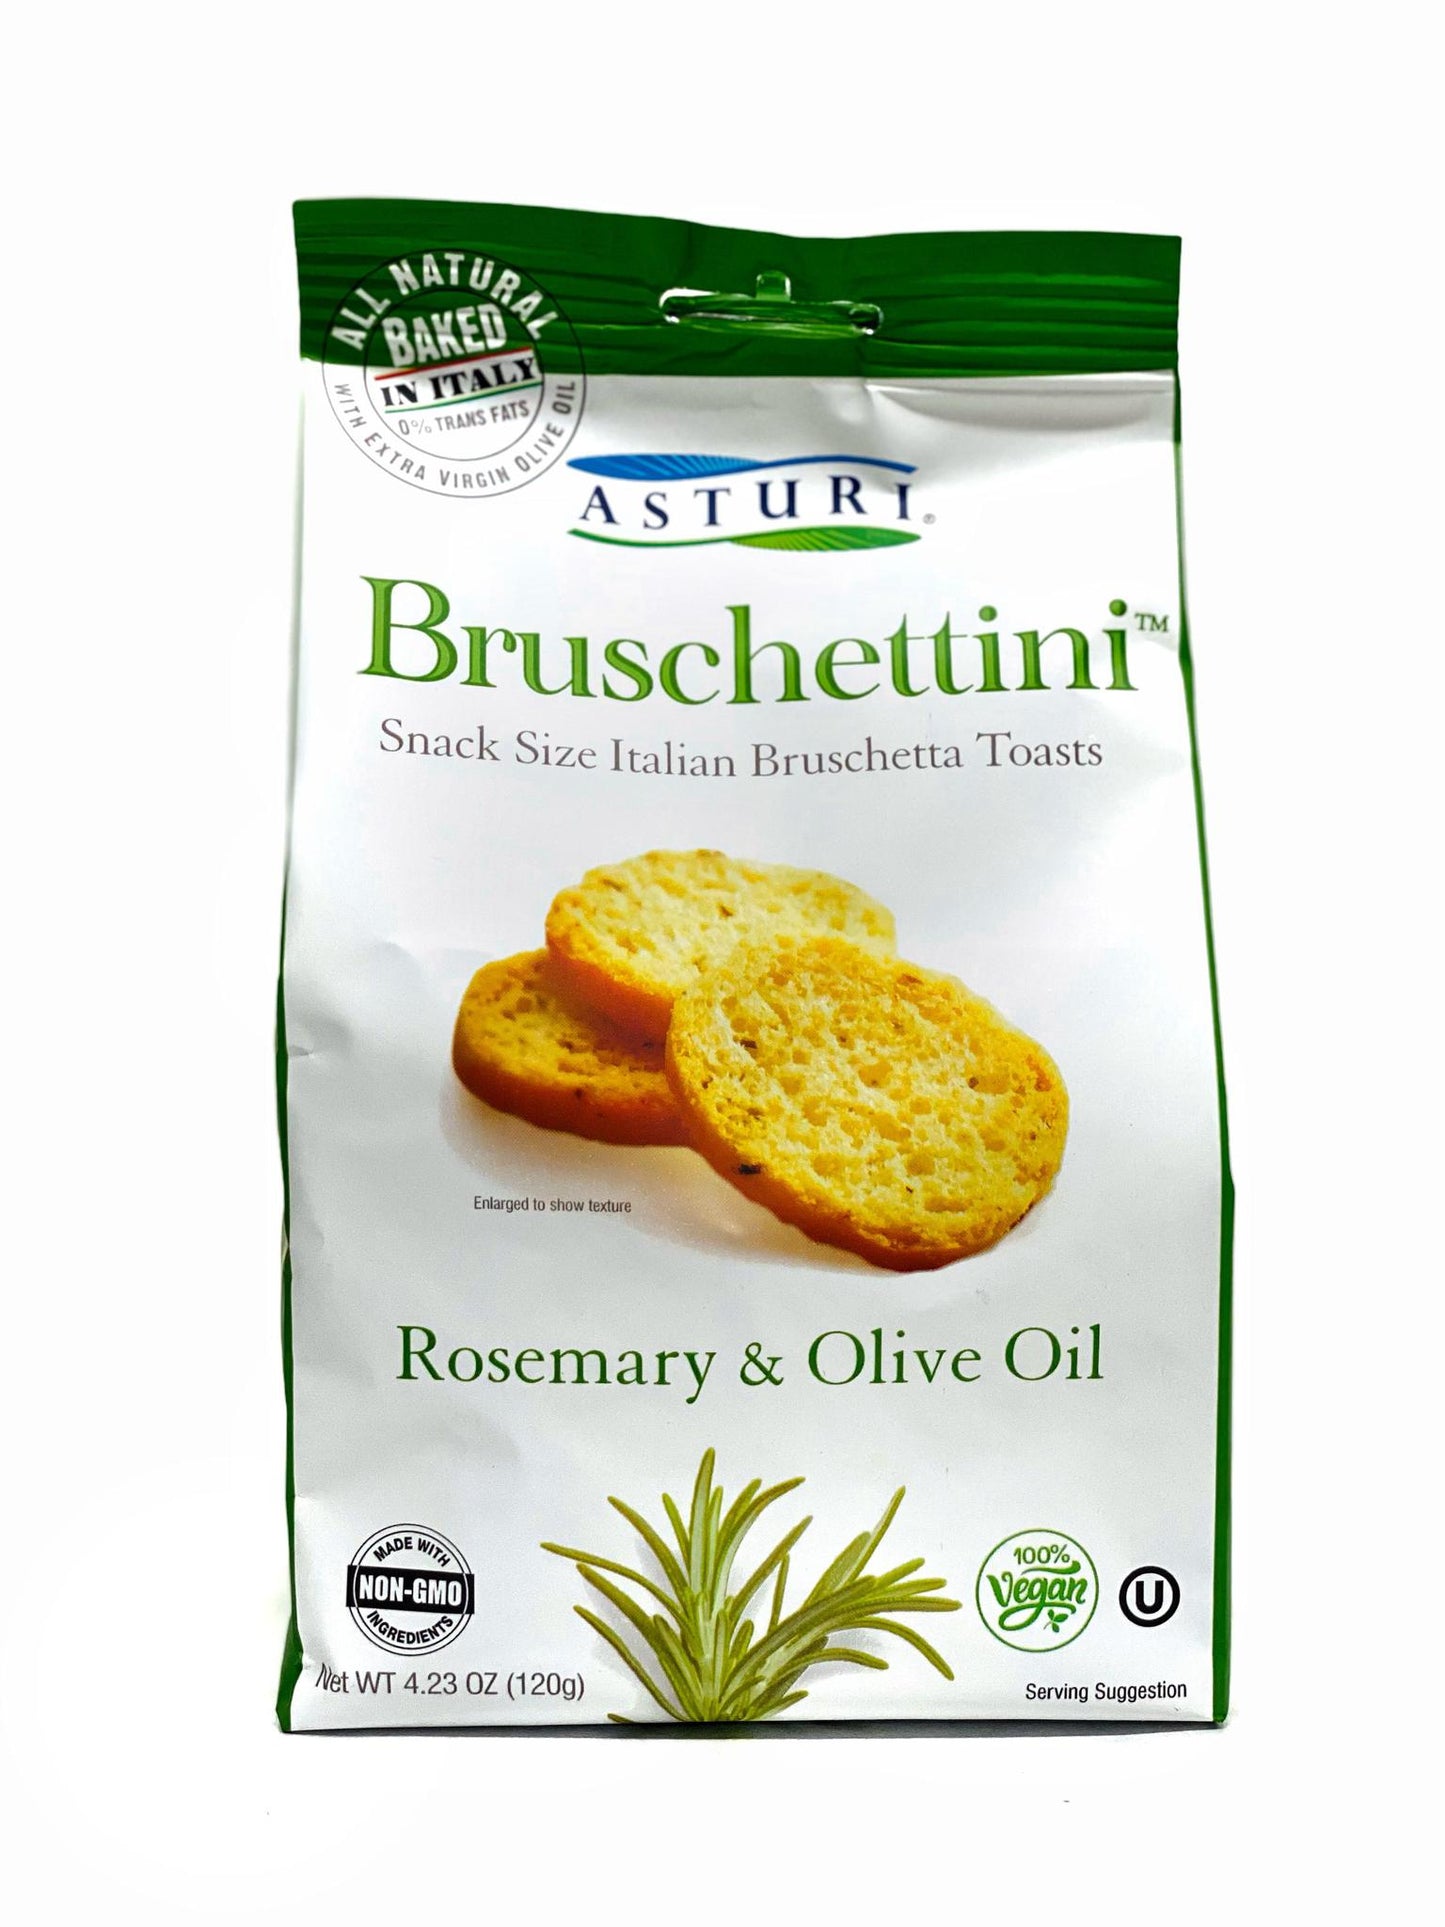 Asturi Bruschettini Rosemary & Olive Oil, 4.23 oz